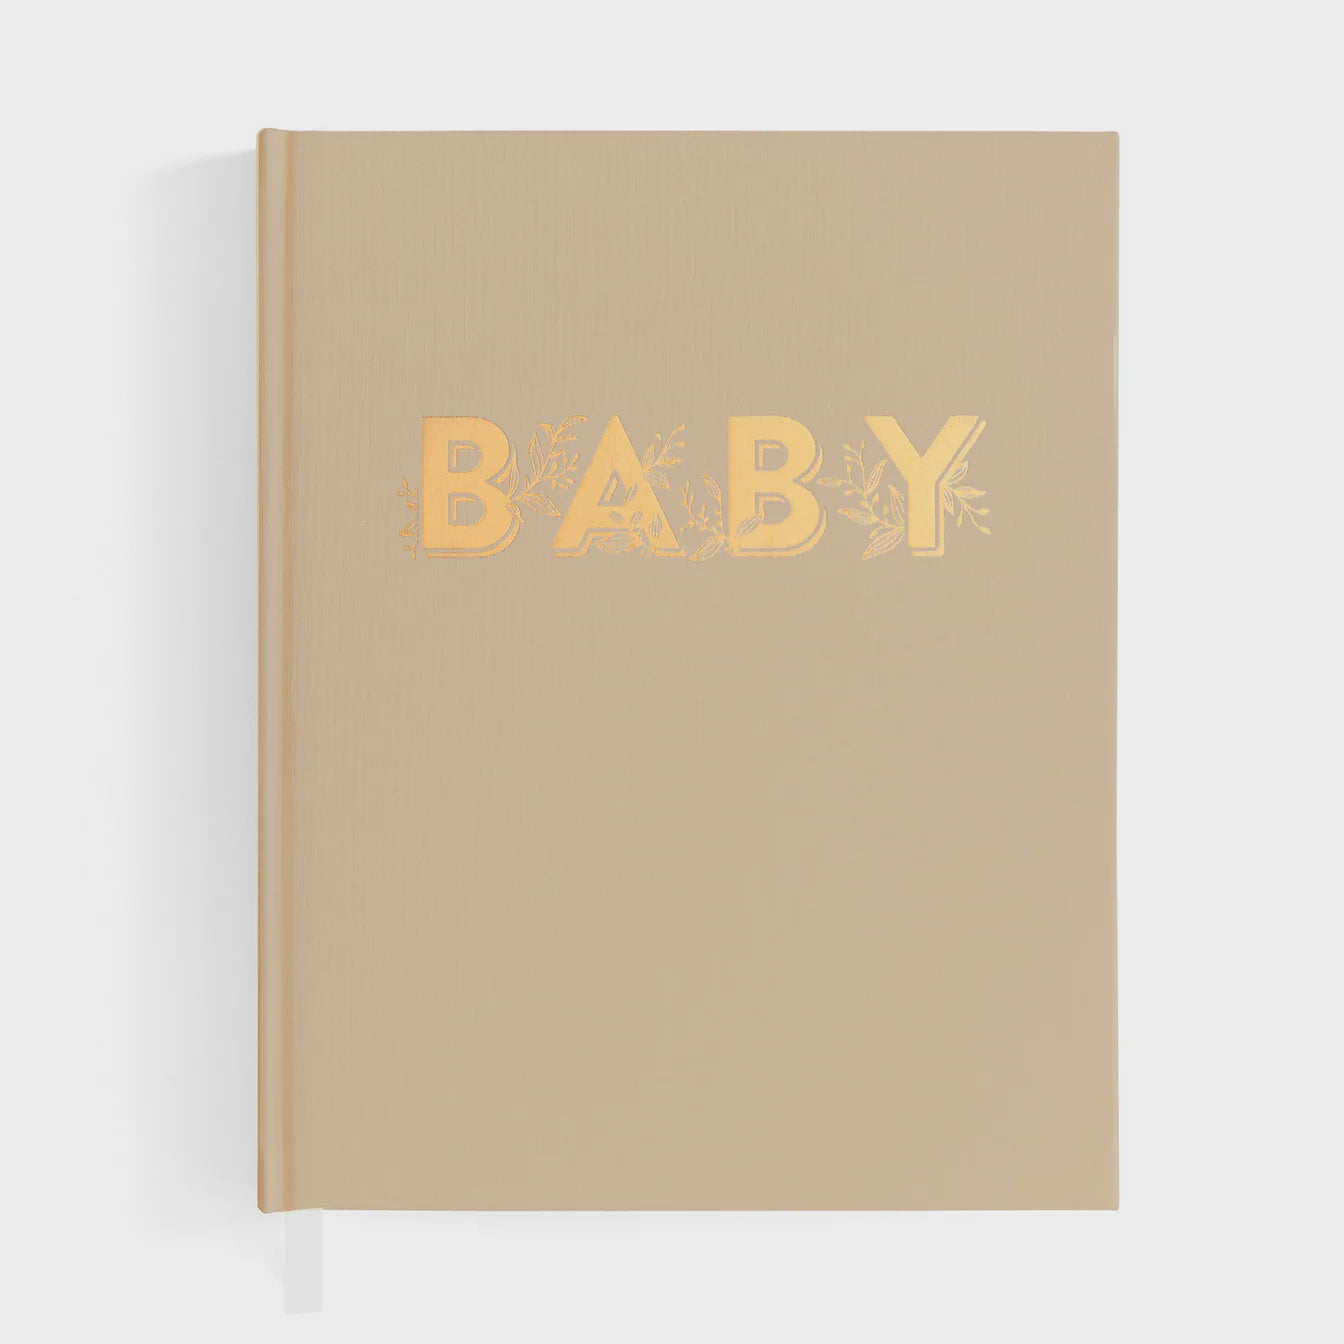 Baby Book - Biscuit